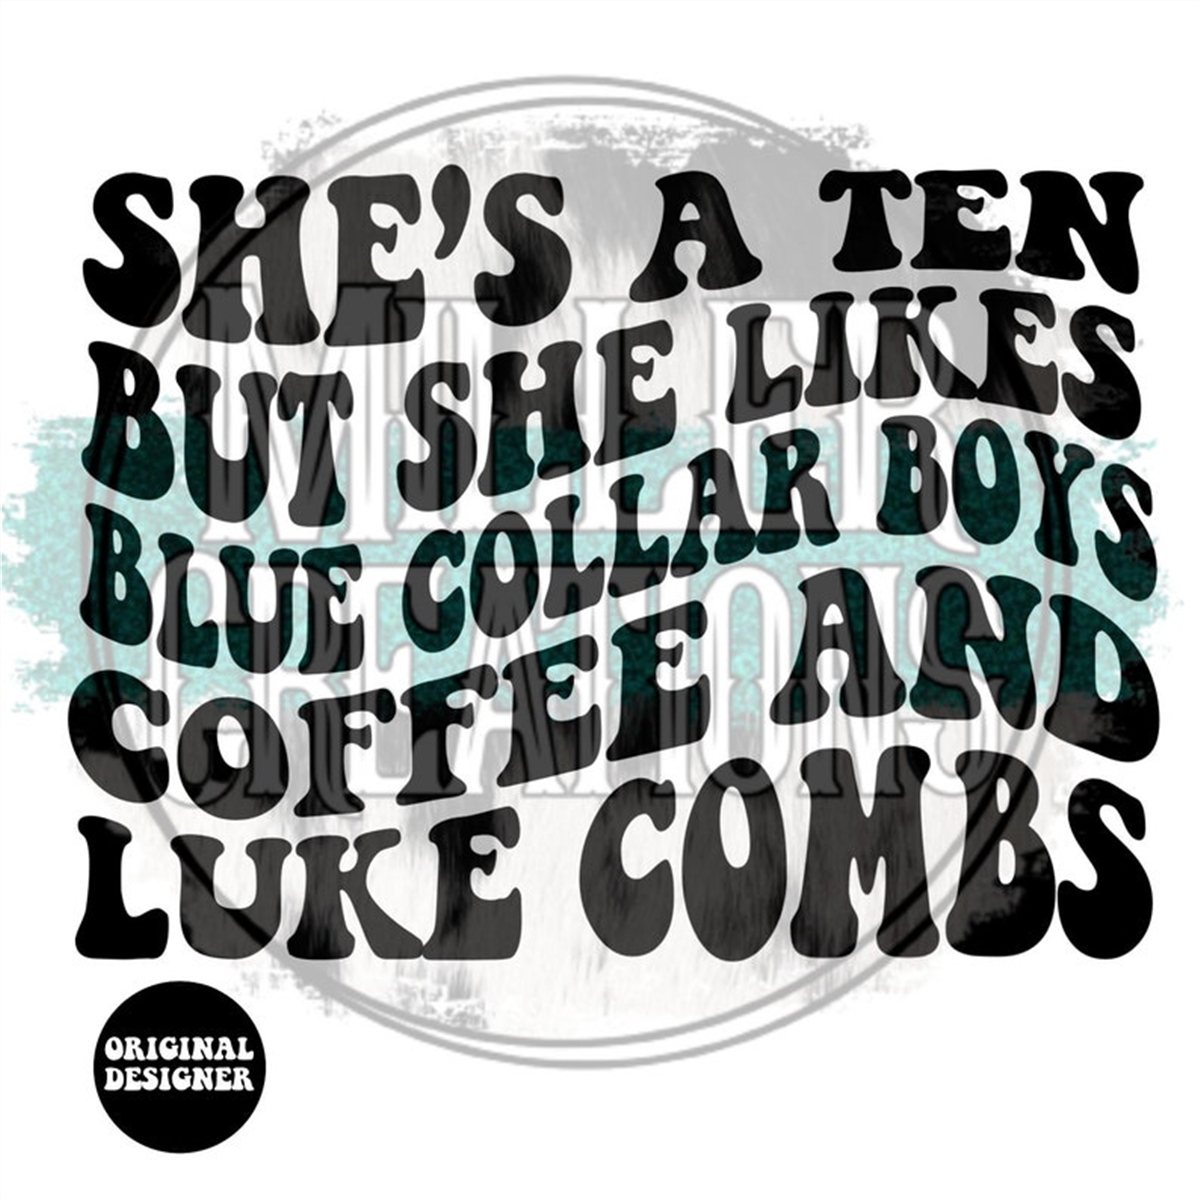 blue-collar-boys-coffee-luke-combs-svg-cricut-image-1